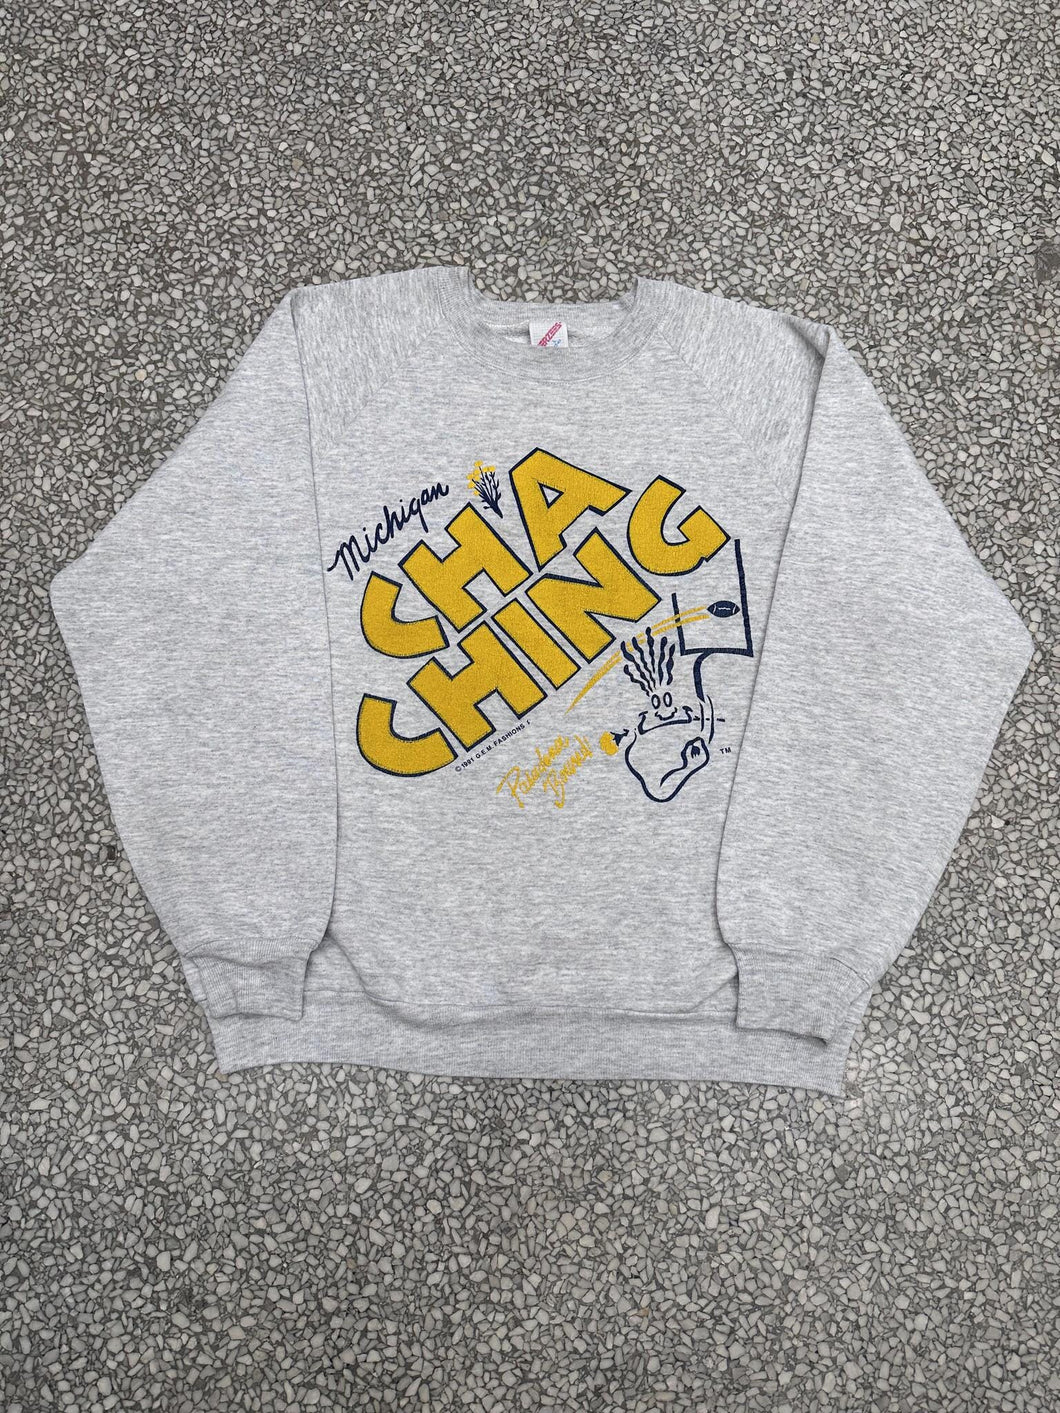 Michigan Wolverines Vintage 1991 Cha Ching Crewneck Faded Grey ABC Vintage 